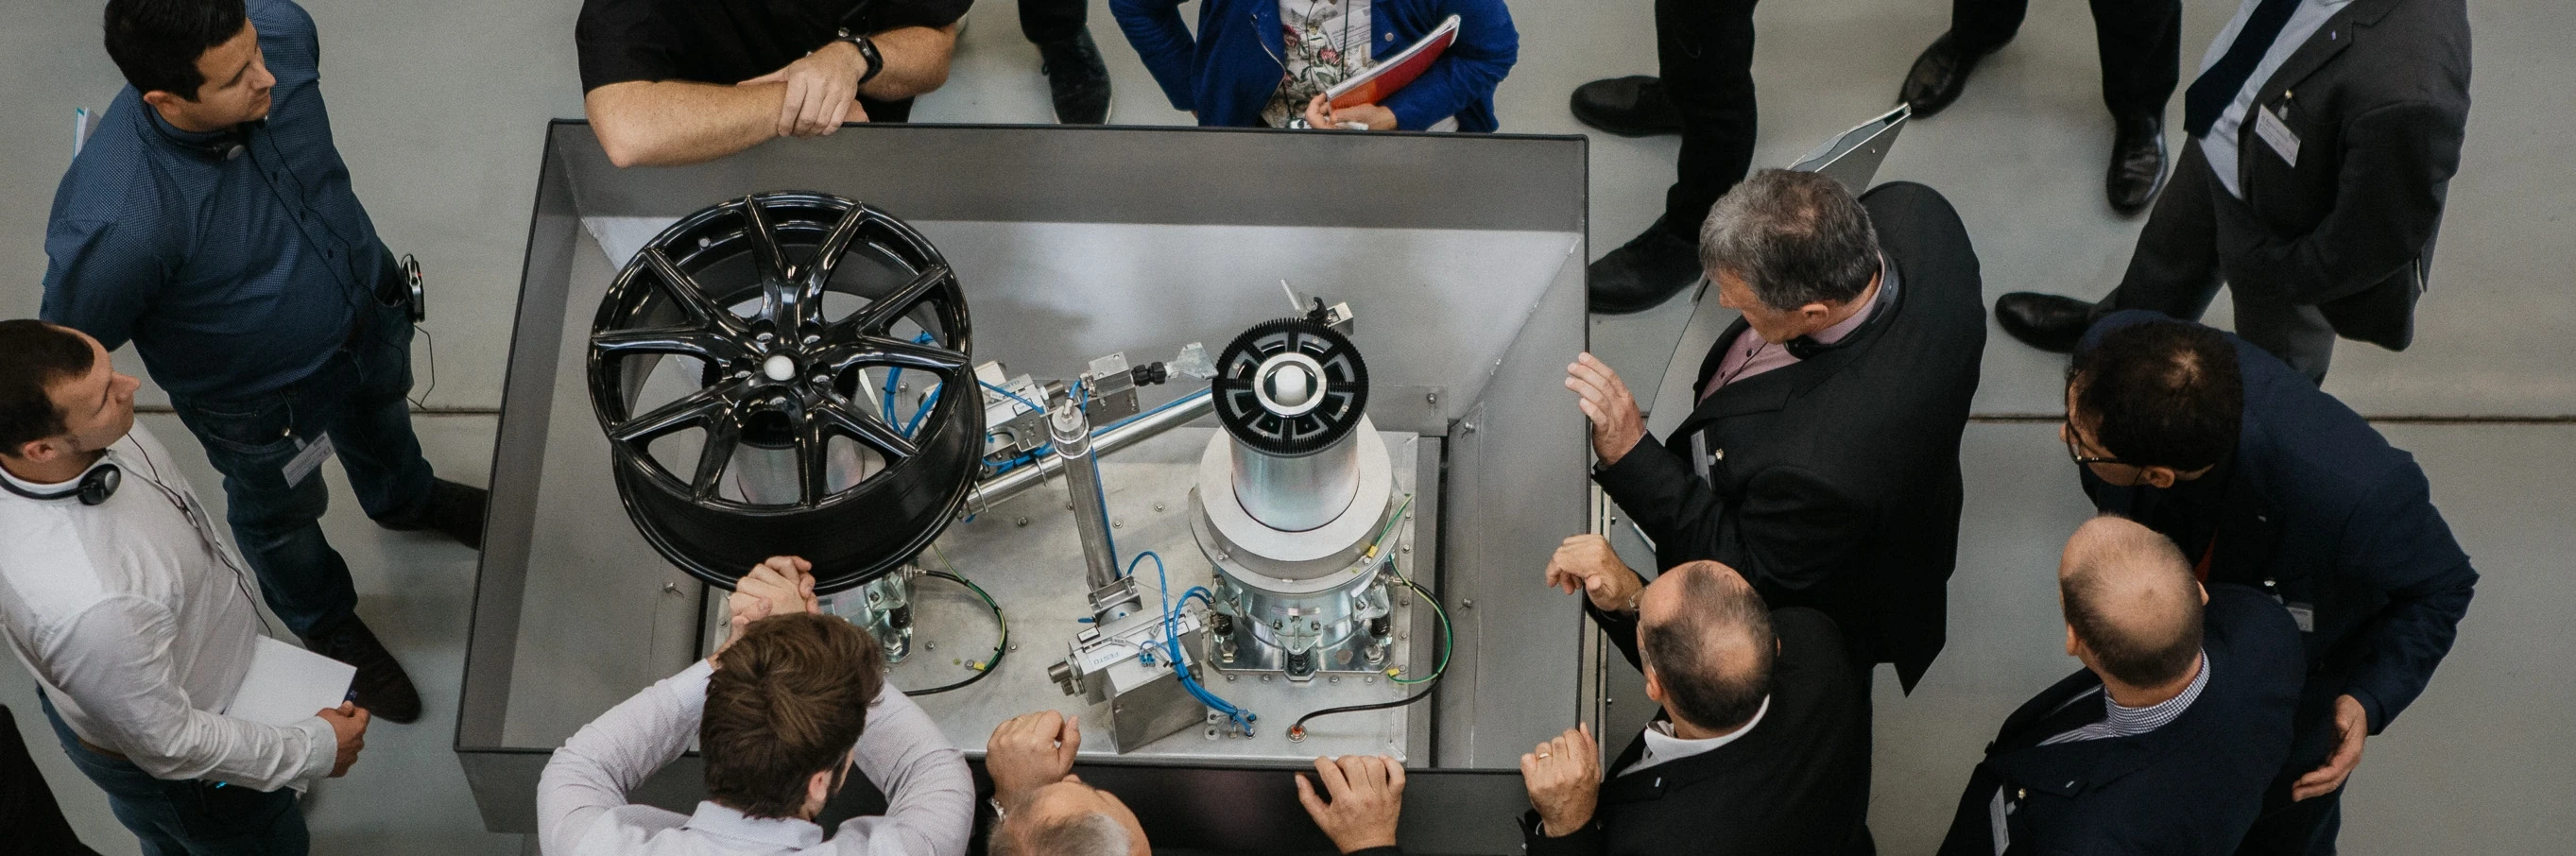 visitors examinating wheel cleaning machine 